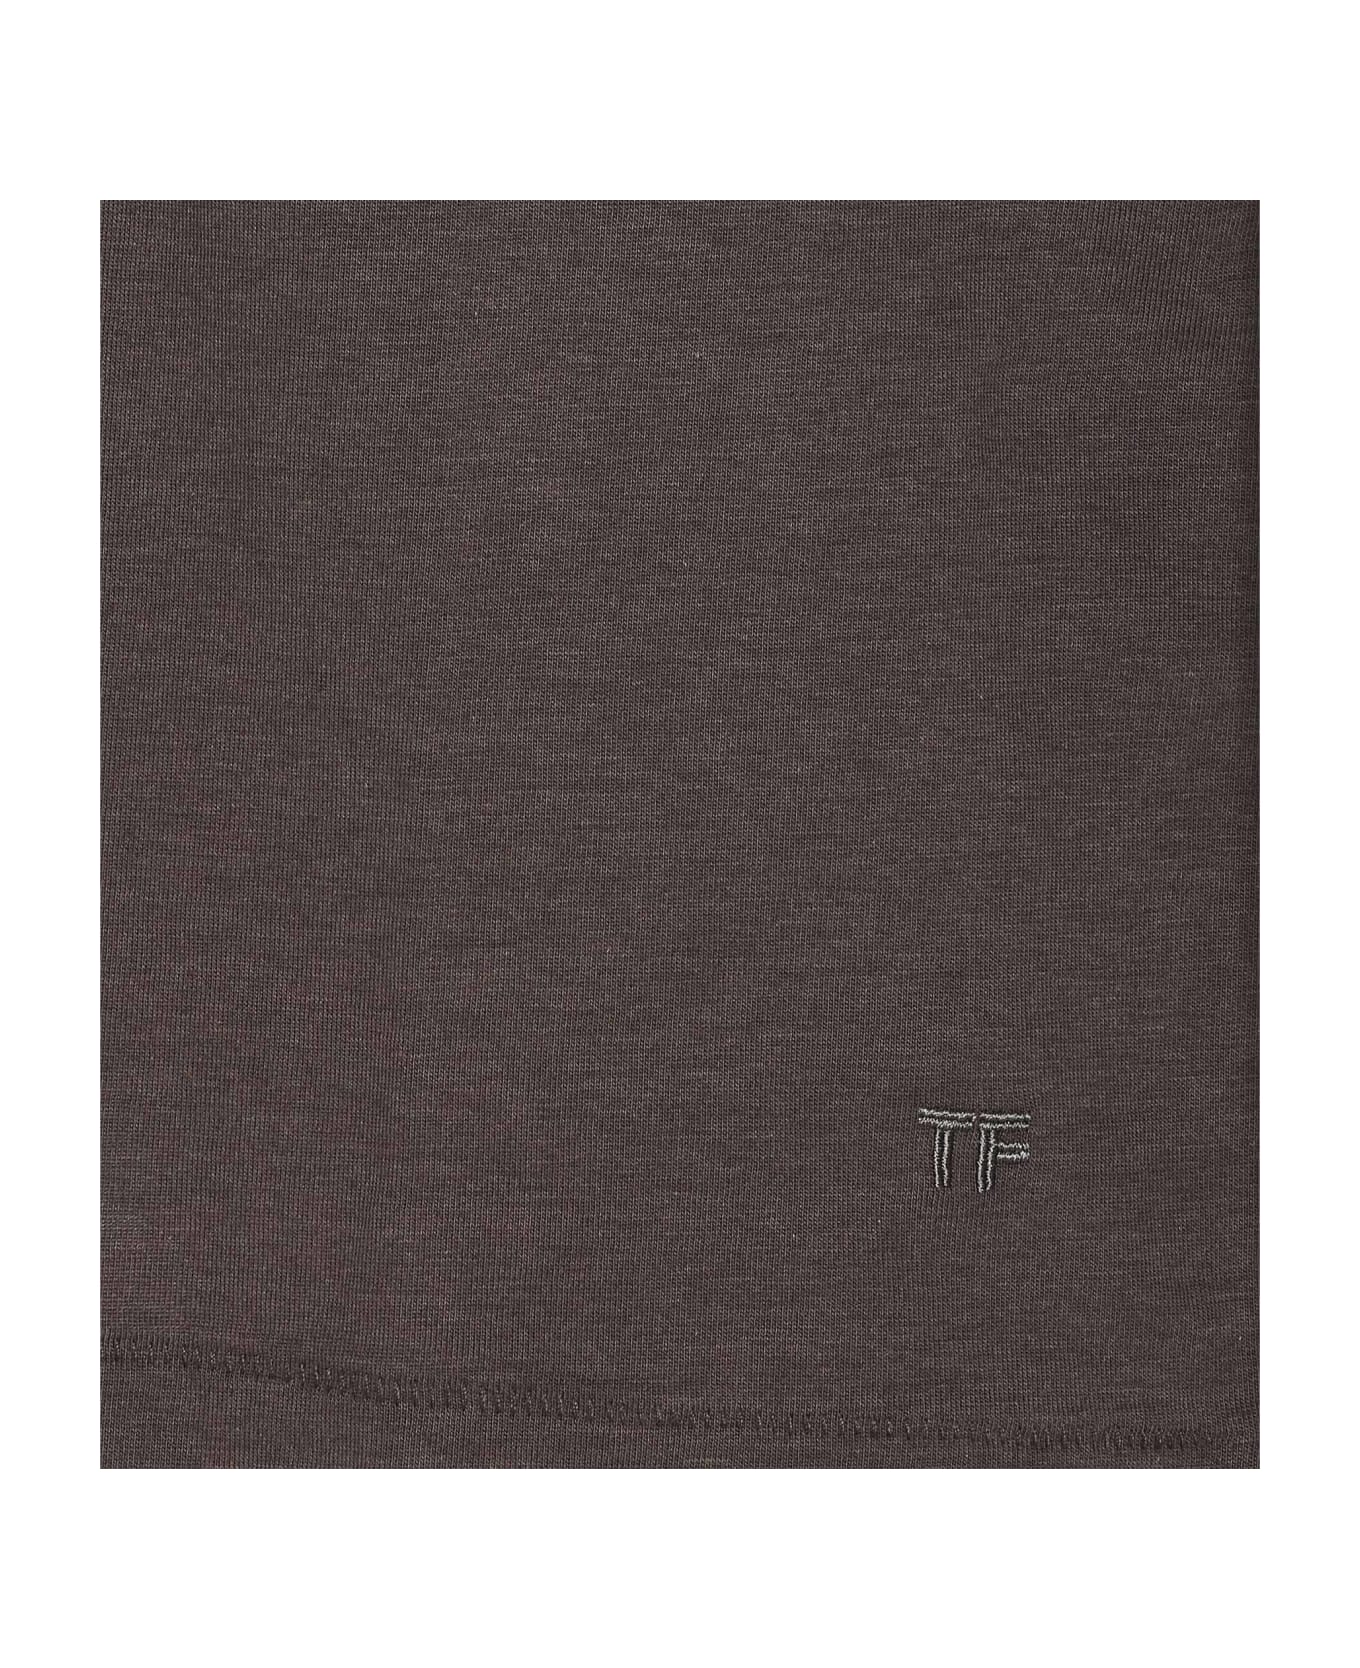 Tom Ford T-shirt - Grey